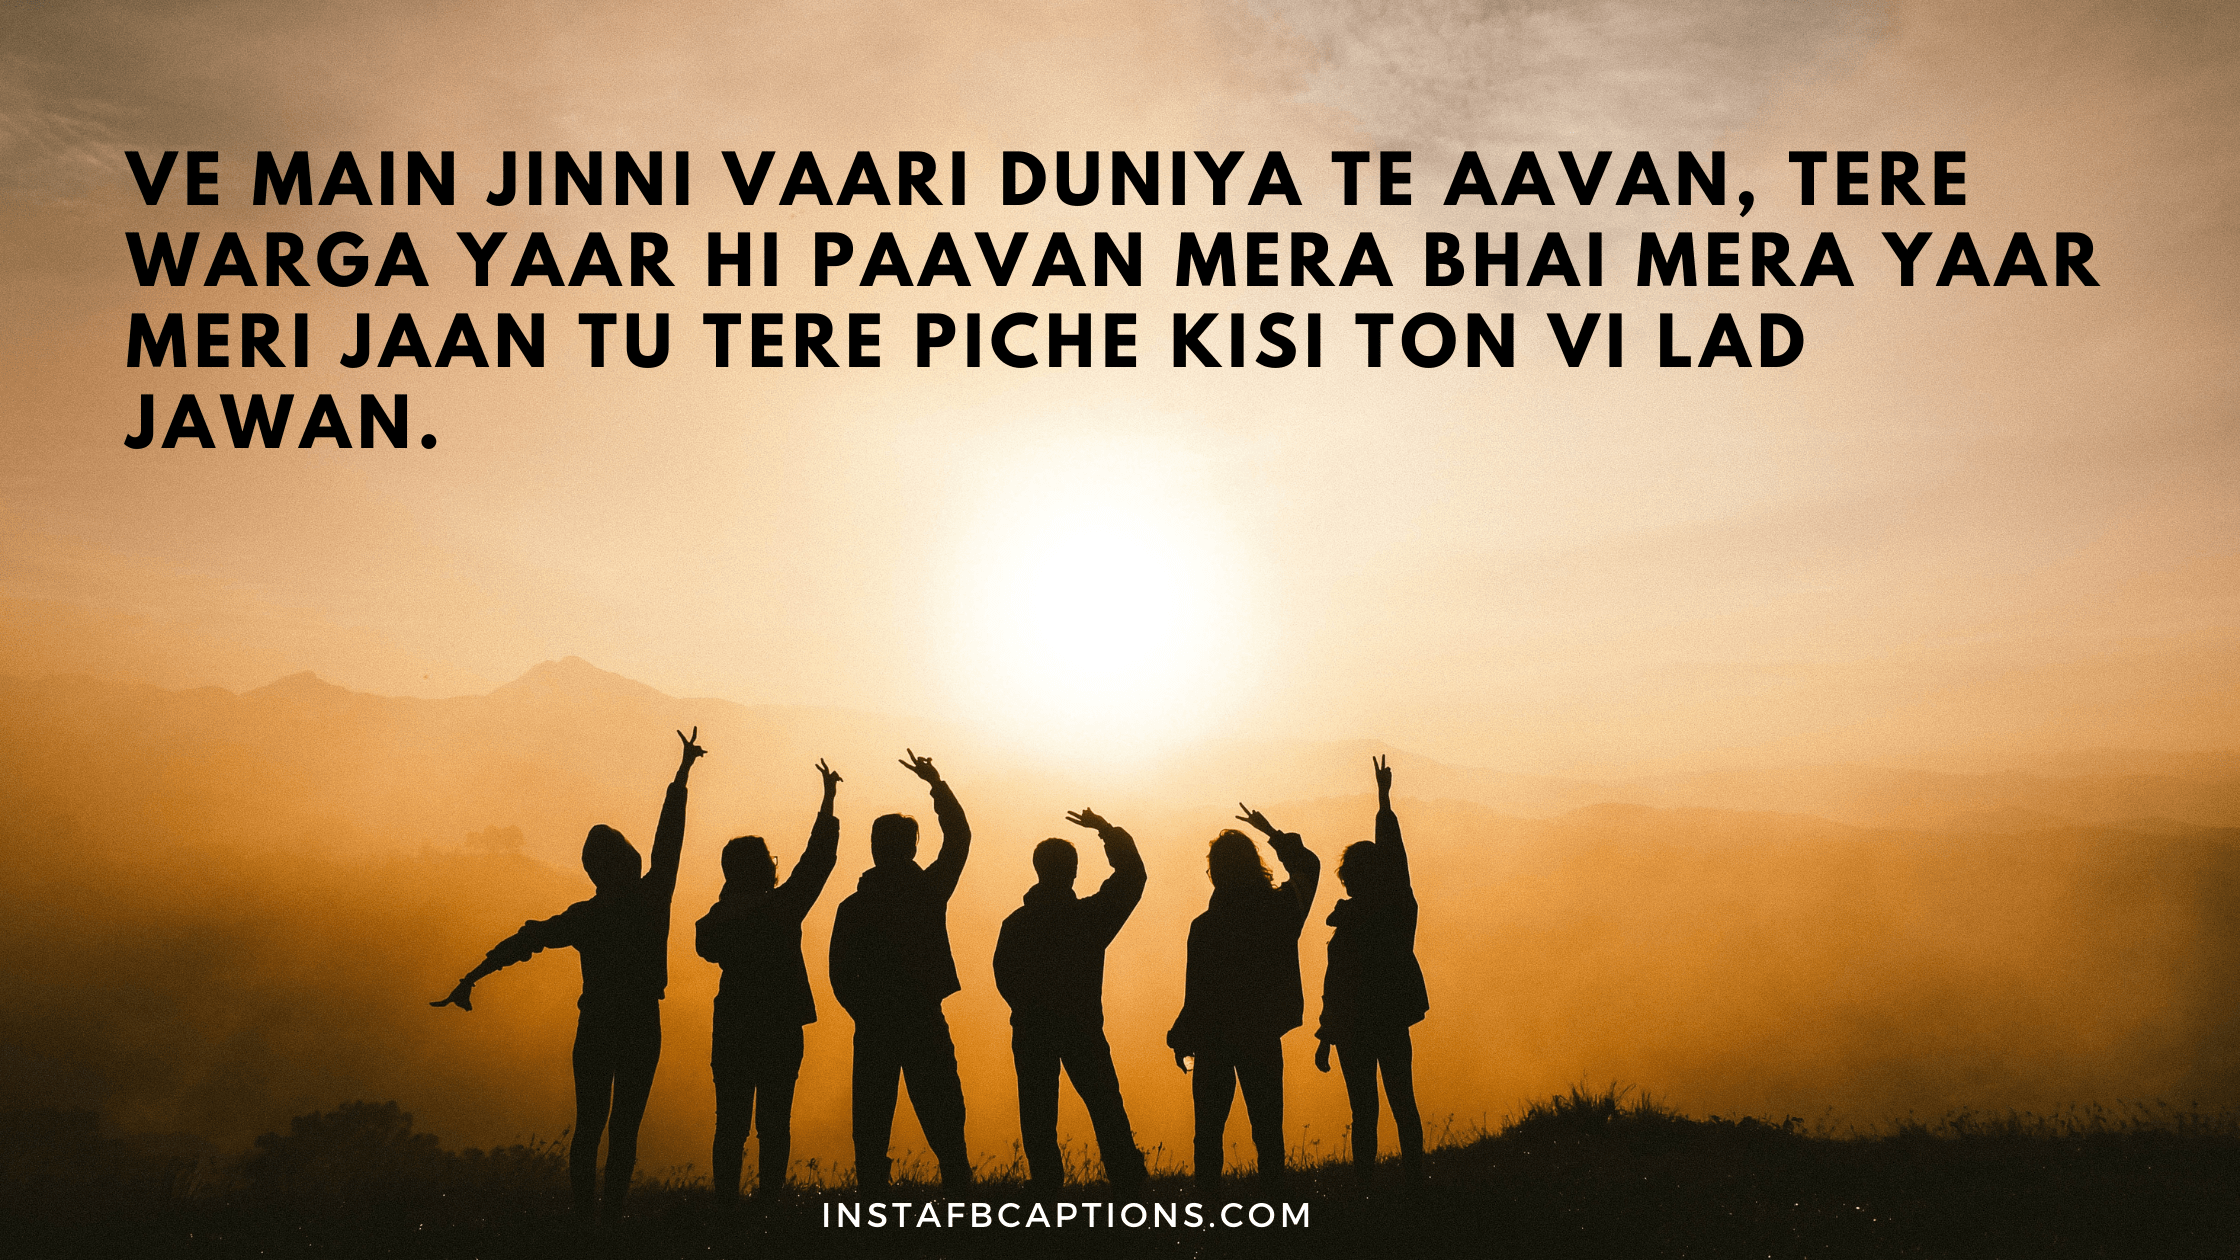 Punjabi Song Lyrics Caption On Friendship  - Friendship Punjabi Captions For Social Media Post - [New] Best Punjabi Lyrics Captions For Instagram 2023